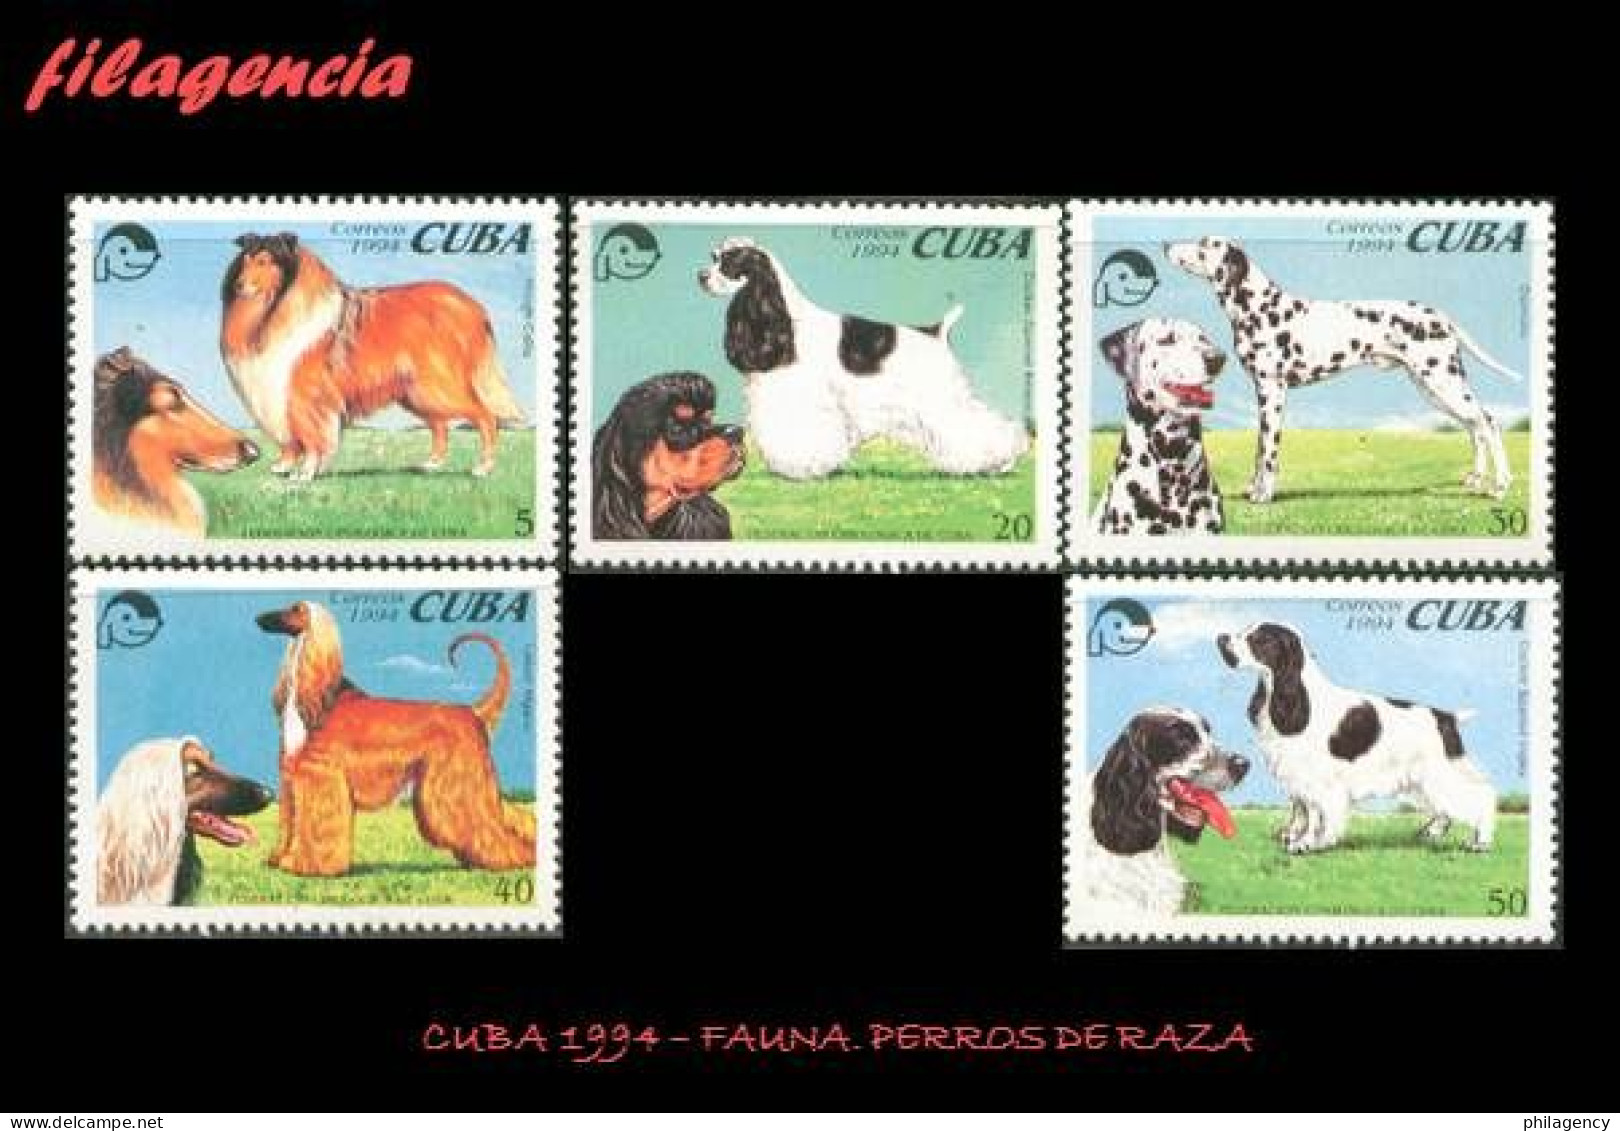 CUBA MINT. 1994-11 FAUNA. PERROS DE RAZA - Nuevos